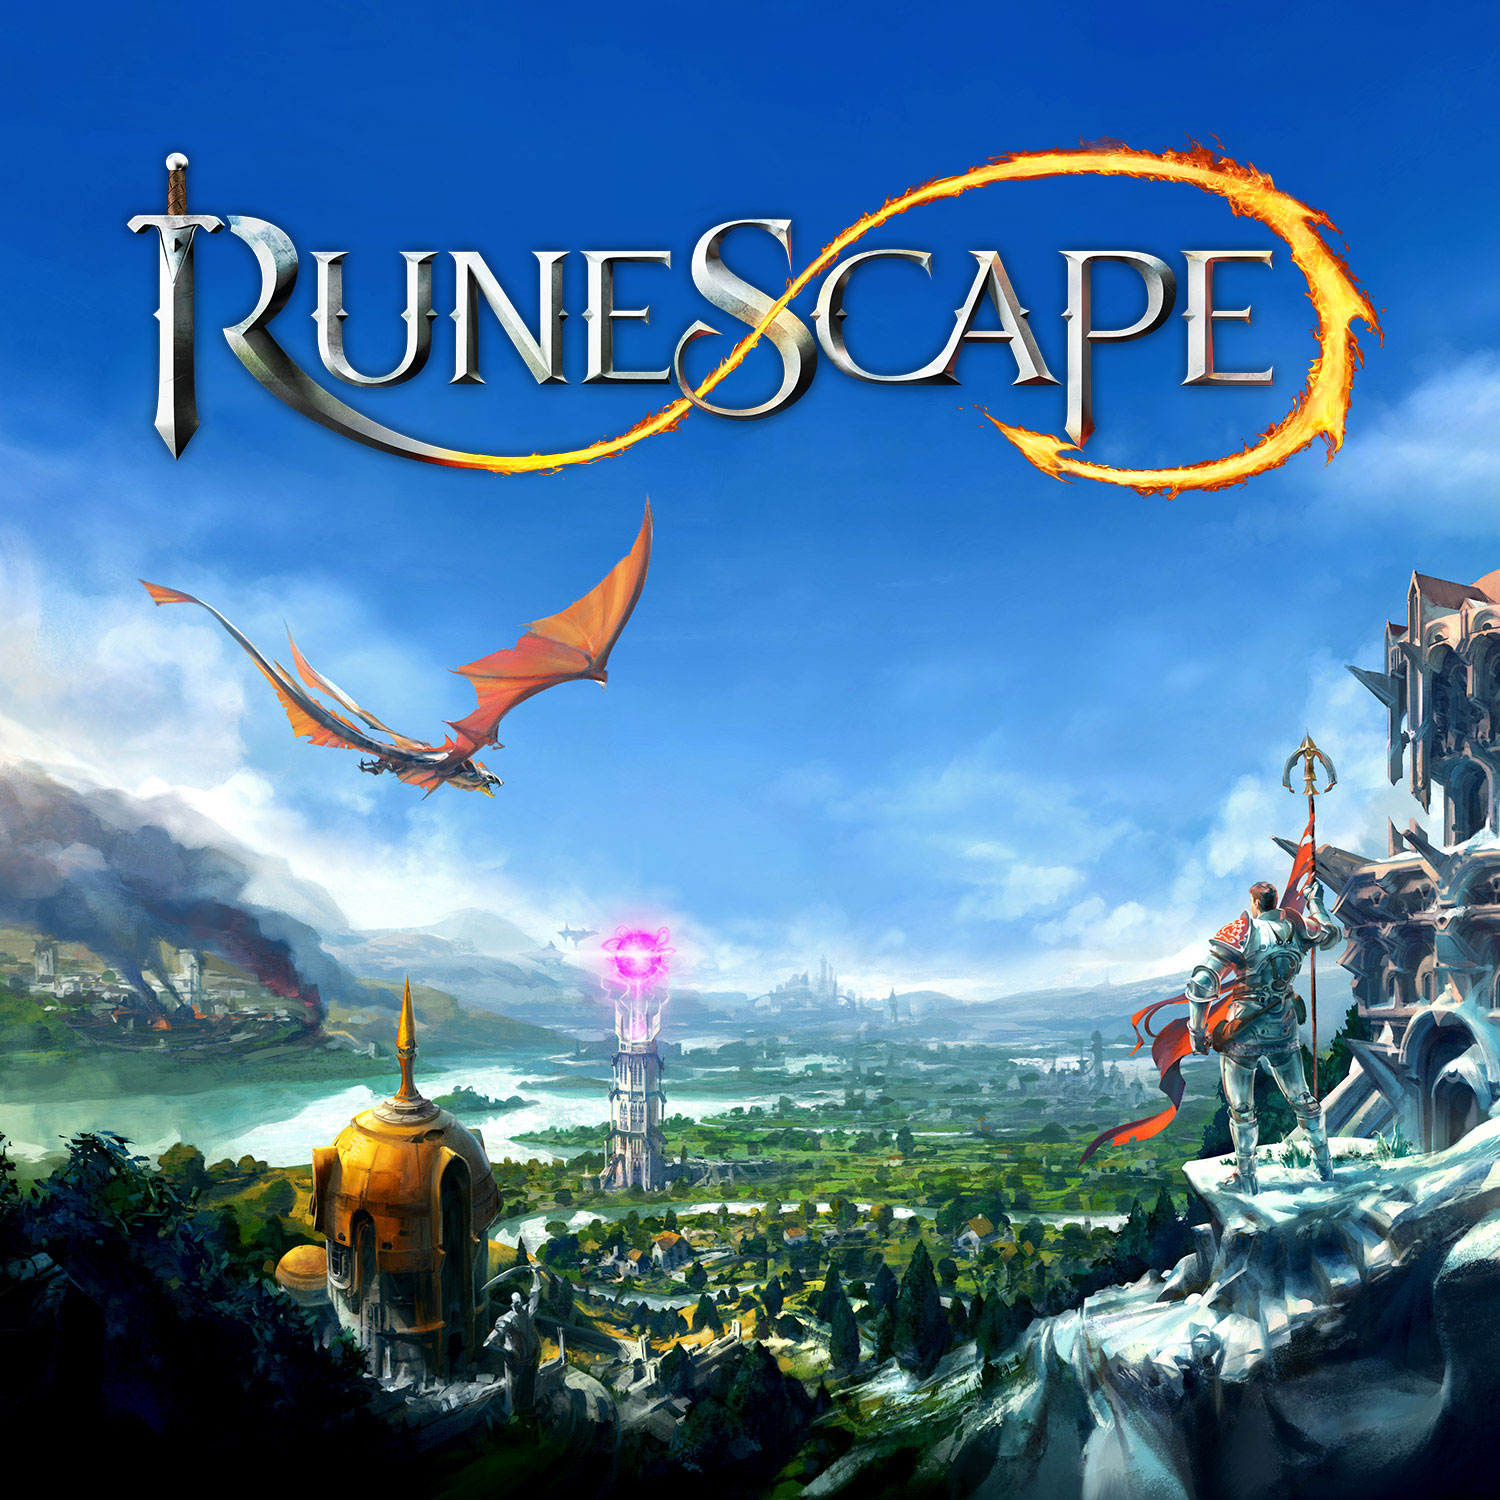 Runescape download minecraft cape download